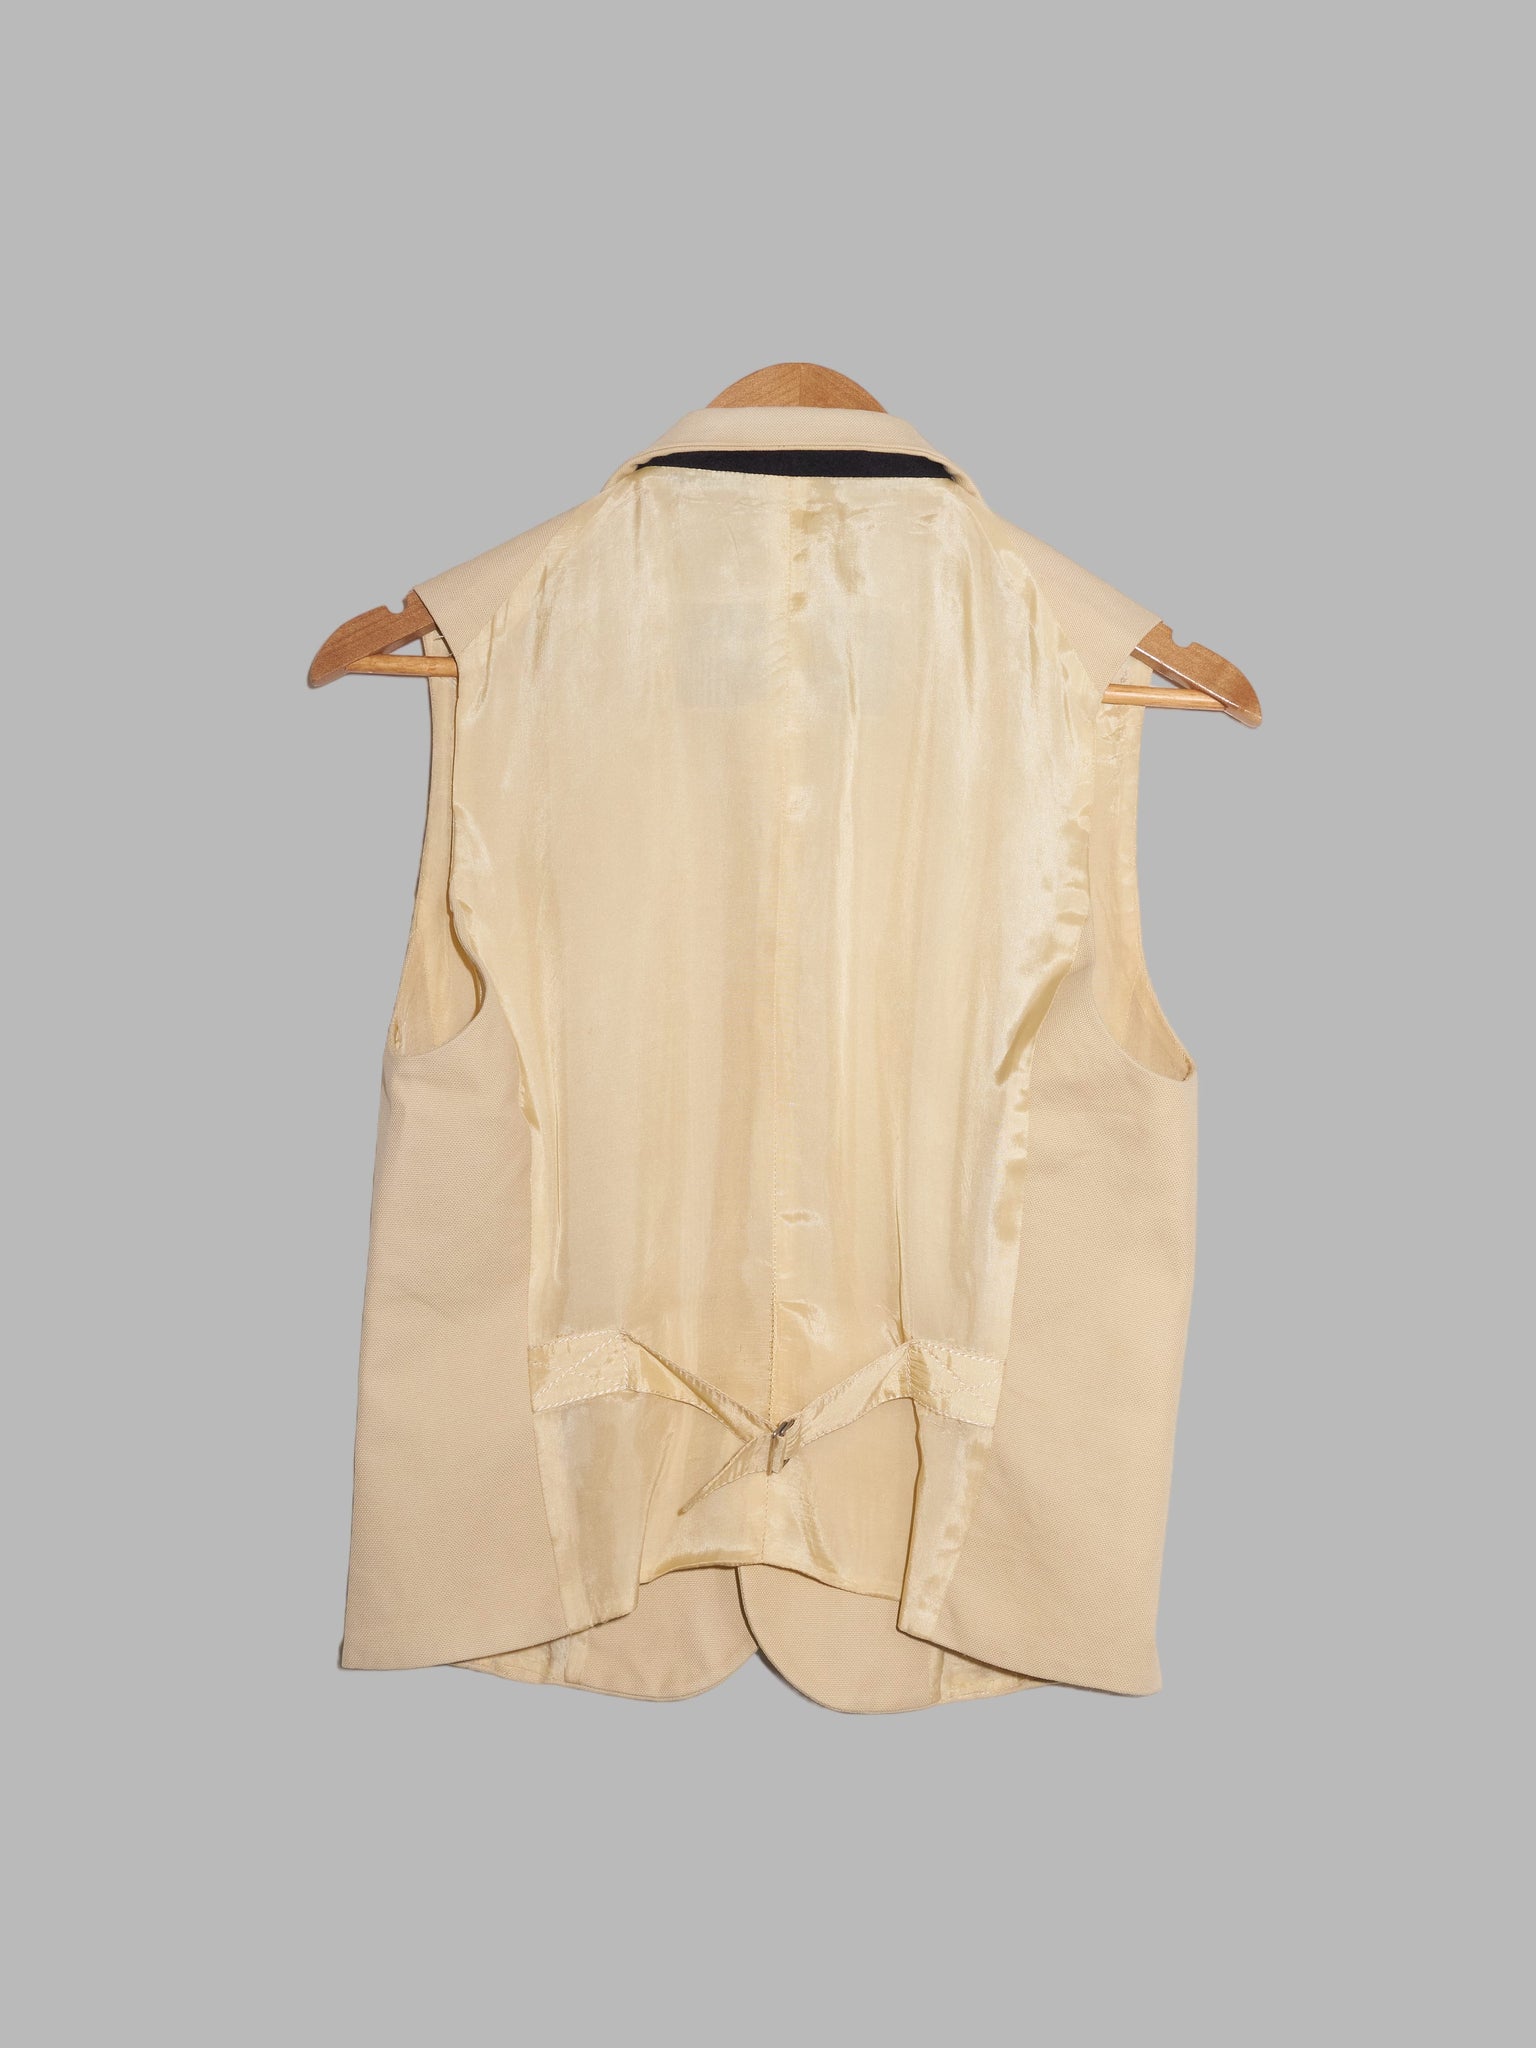 Dirk Bikkembergs Hommes 1990s beige cotton canvas waistcoat - size 44 XS